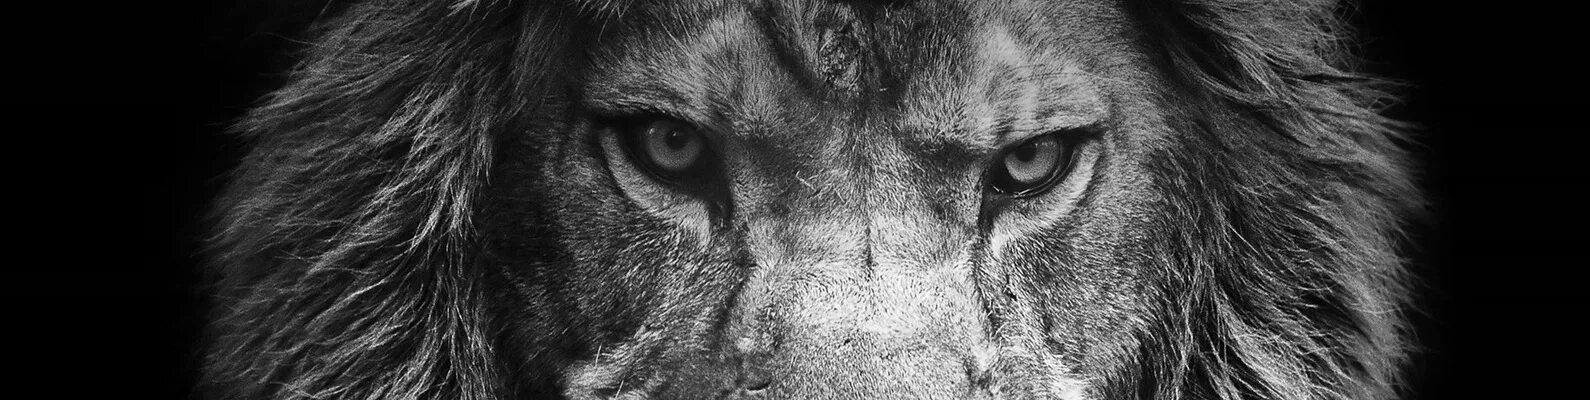 Глаза Льва. Лев черно белое фото. Глаза Льва черные. Глаза Льва темно.